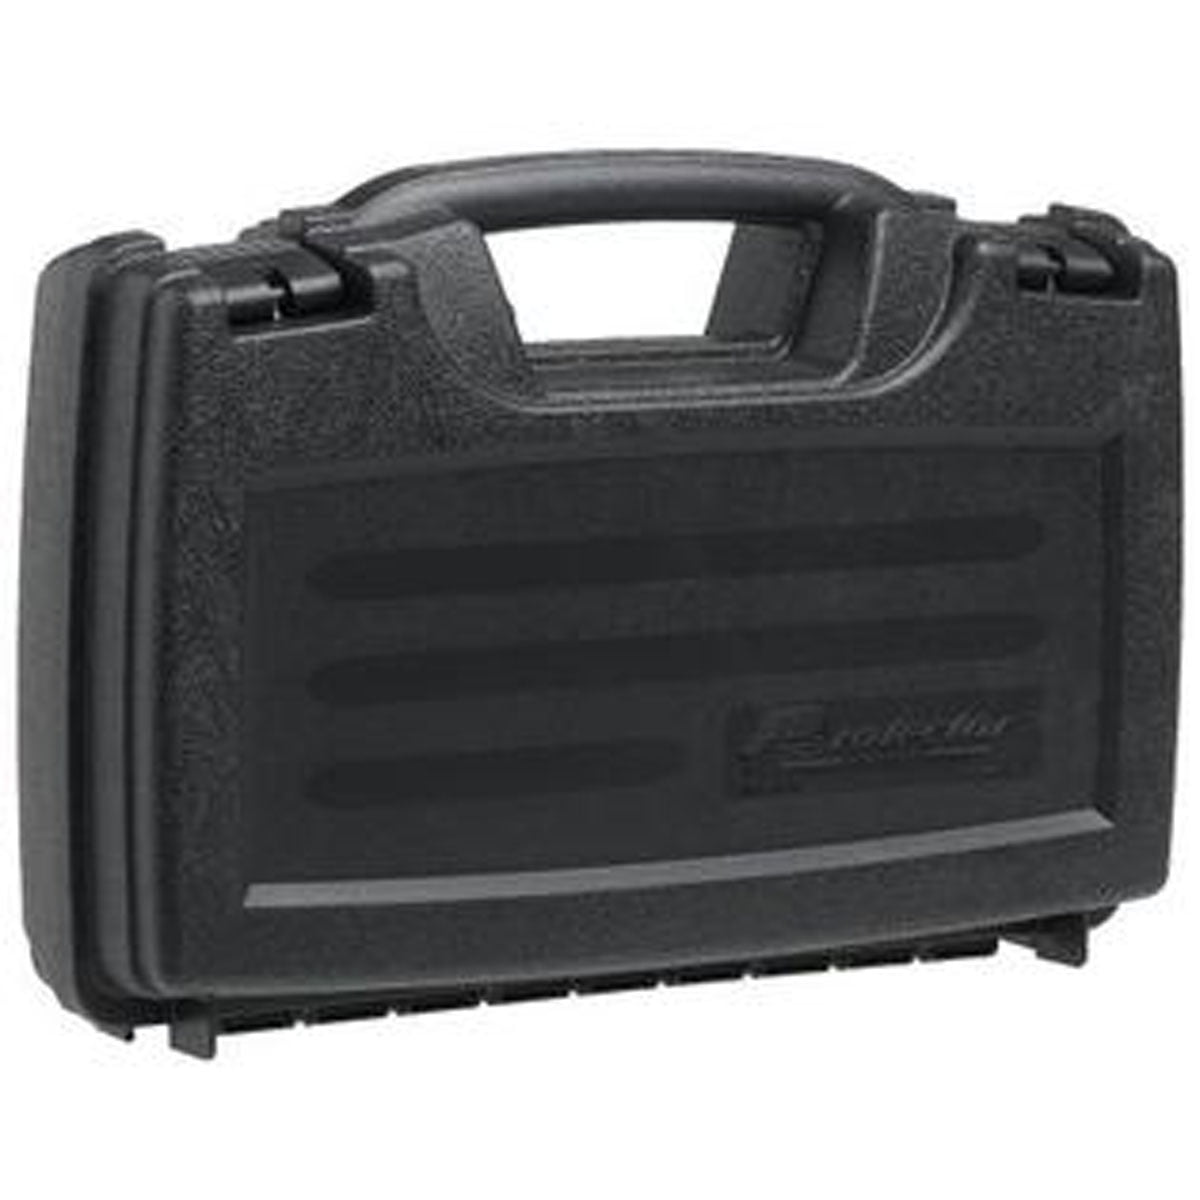 Weapons Suitcase Pistol Case Plastic Black Small 